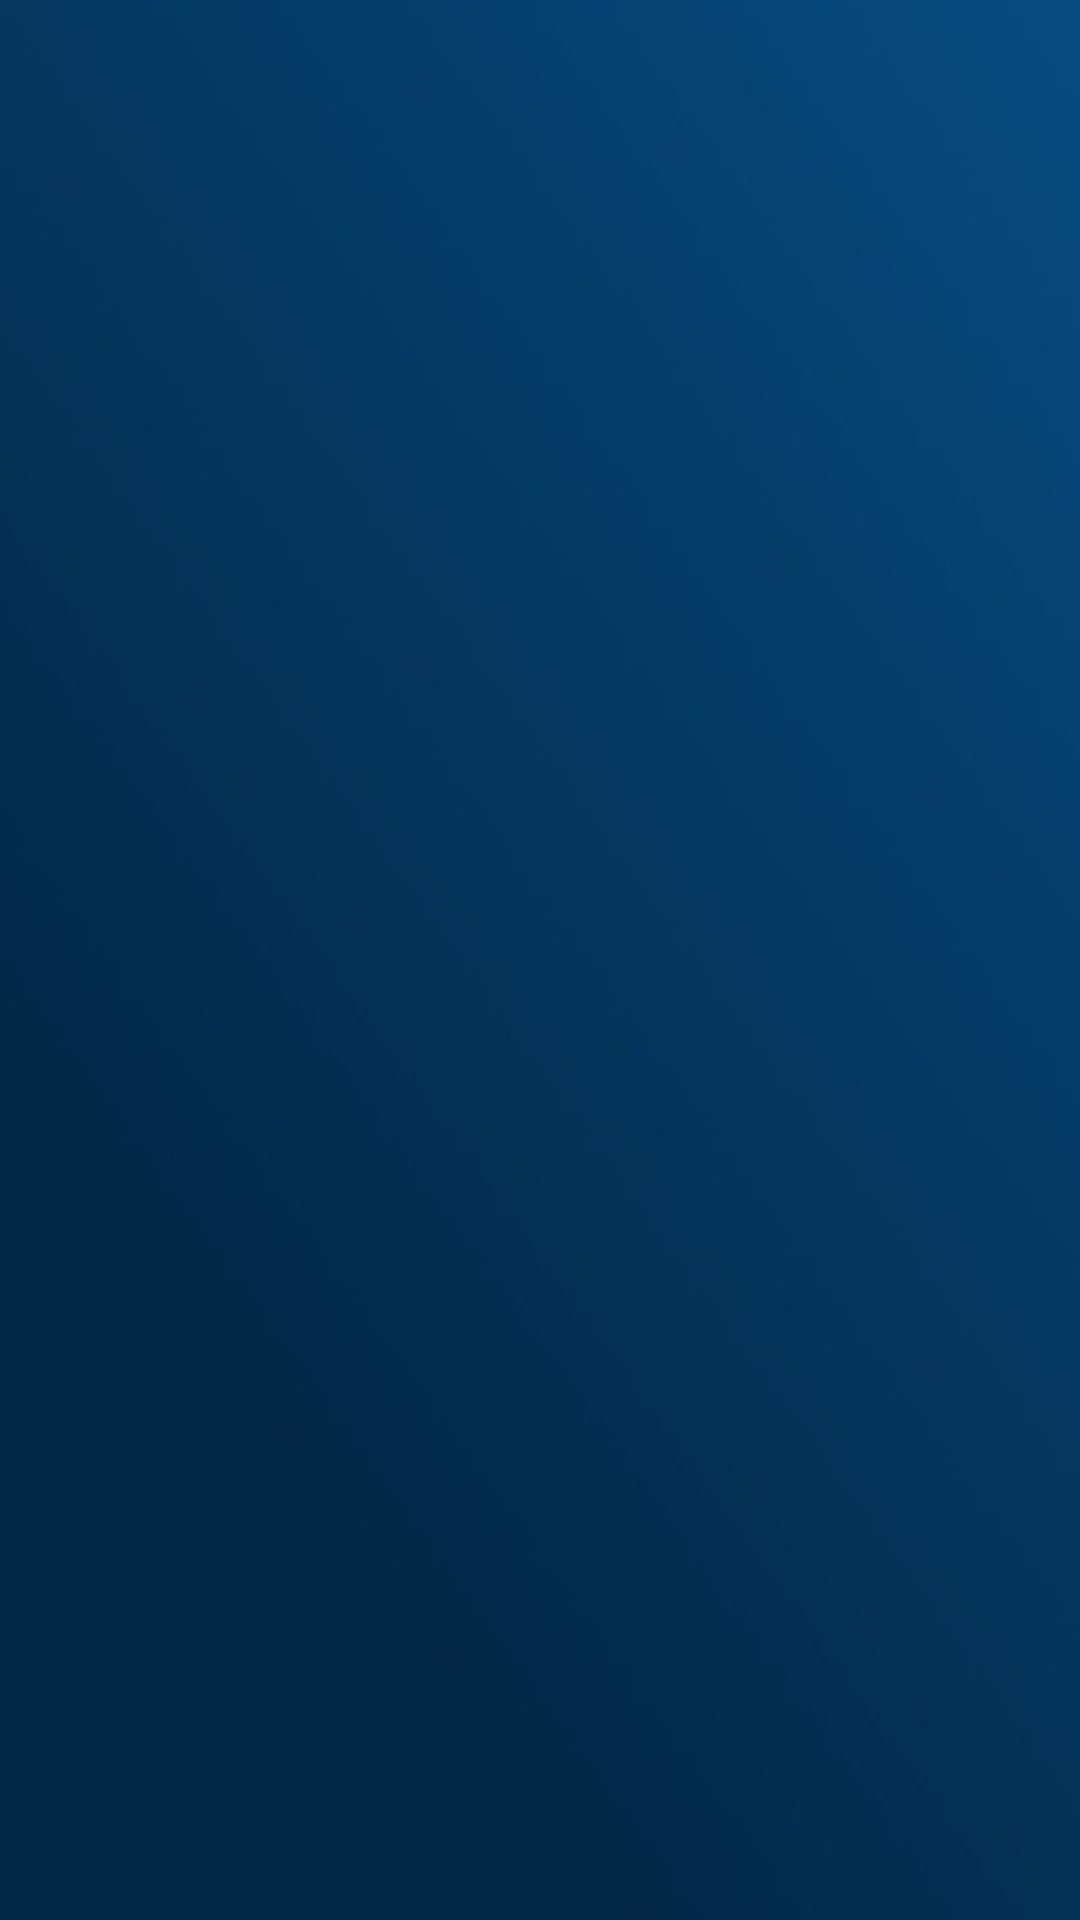 iphone startbildschirm wallpaper,blau,aqua,kobaltblau,schwarz,tagsüber